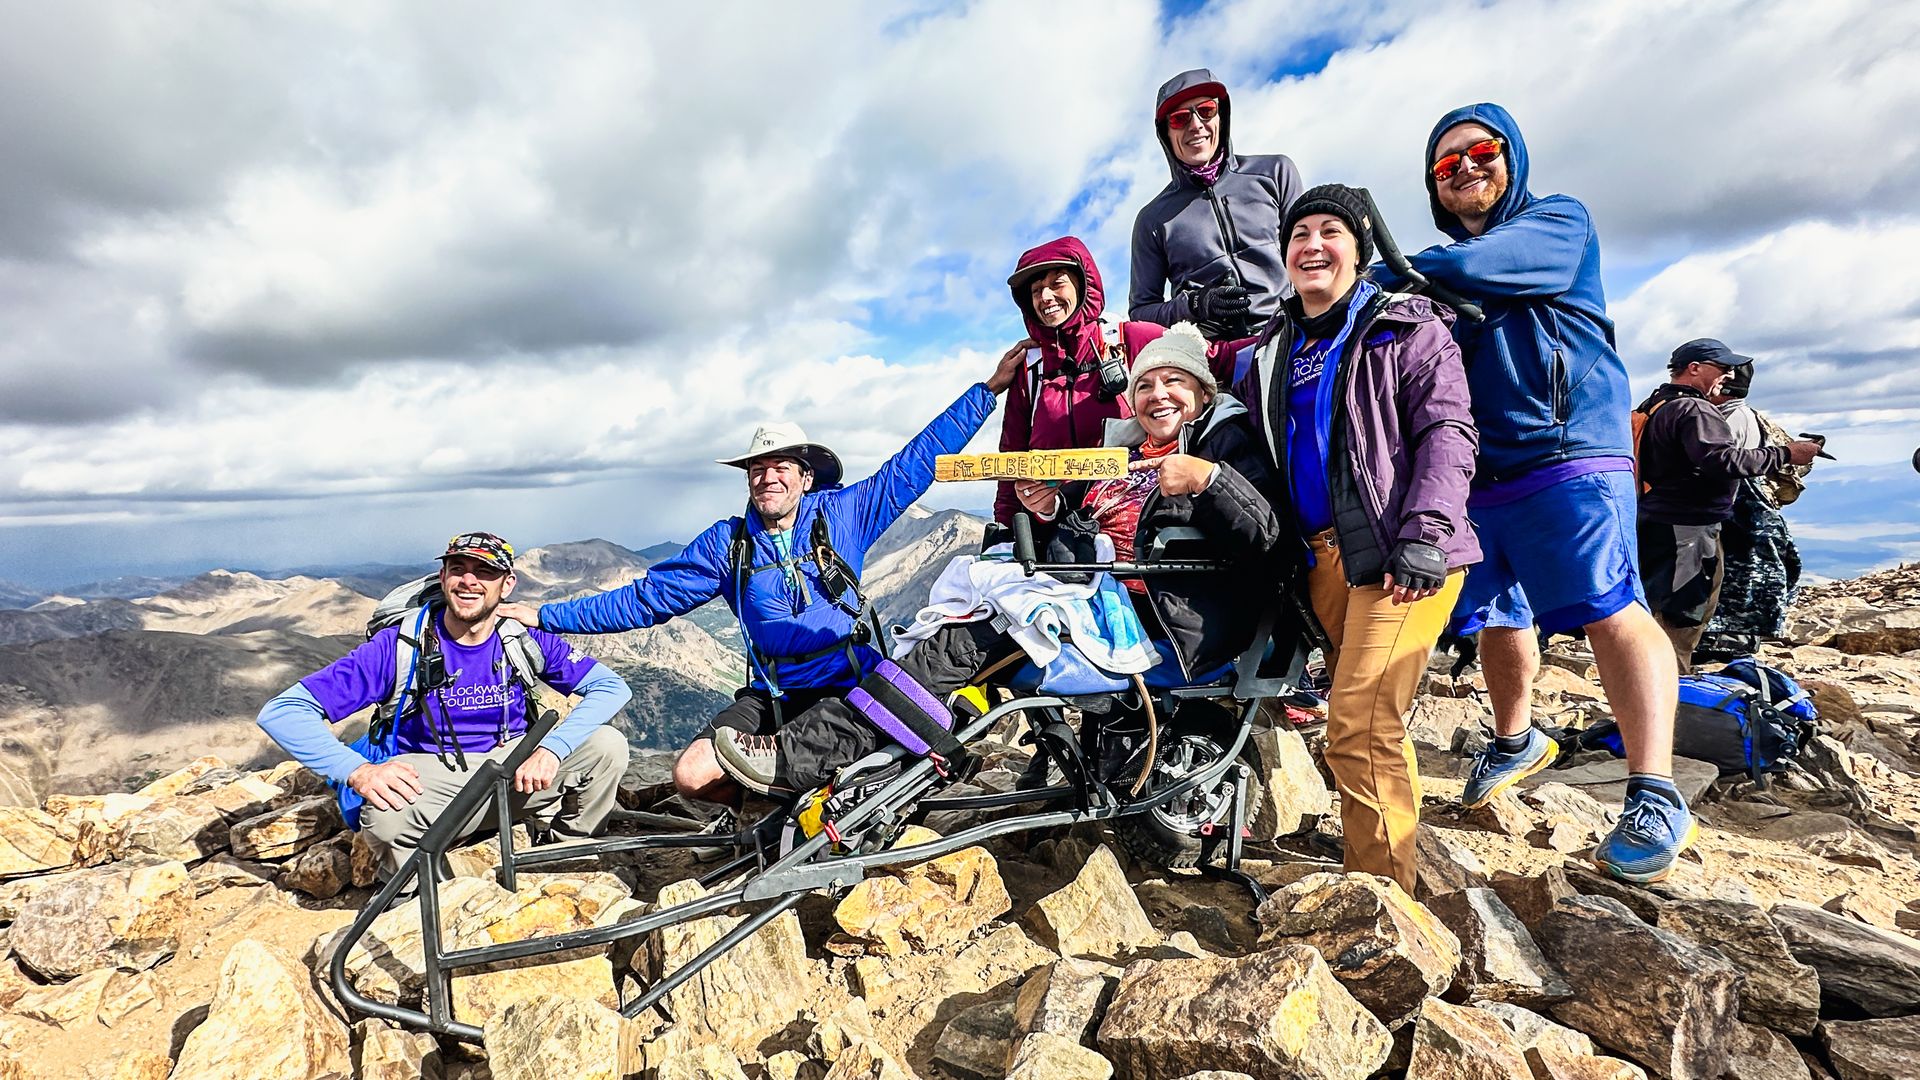 Chris Shively Layne and volunteers atop Mt. Elbert in Colorado.